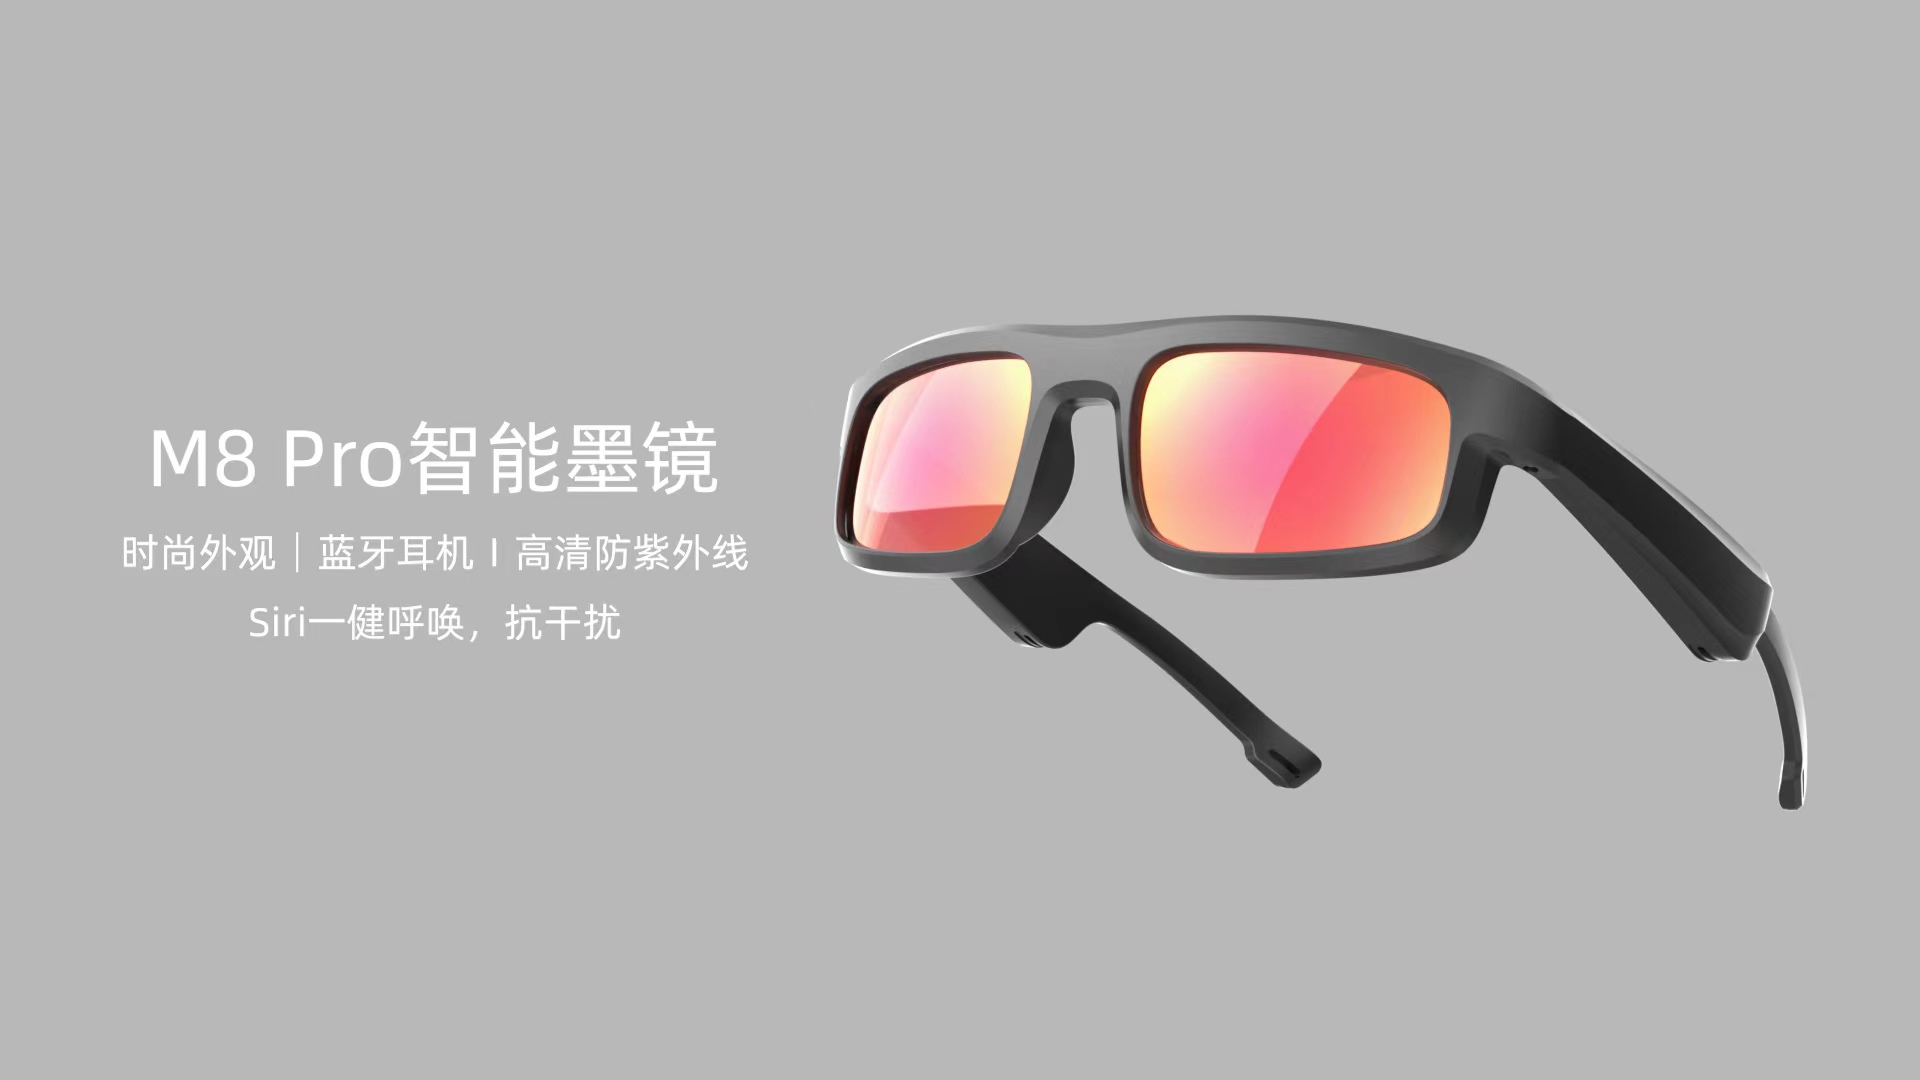 M8 Pro智能蓝牙眼镜 蓝牙耳机眼镜 通话 听歌 墨镜 防紫外线详情图12